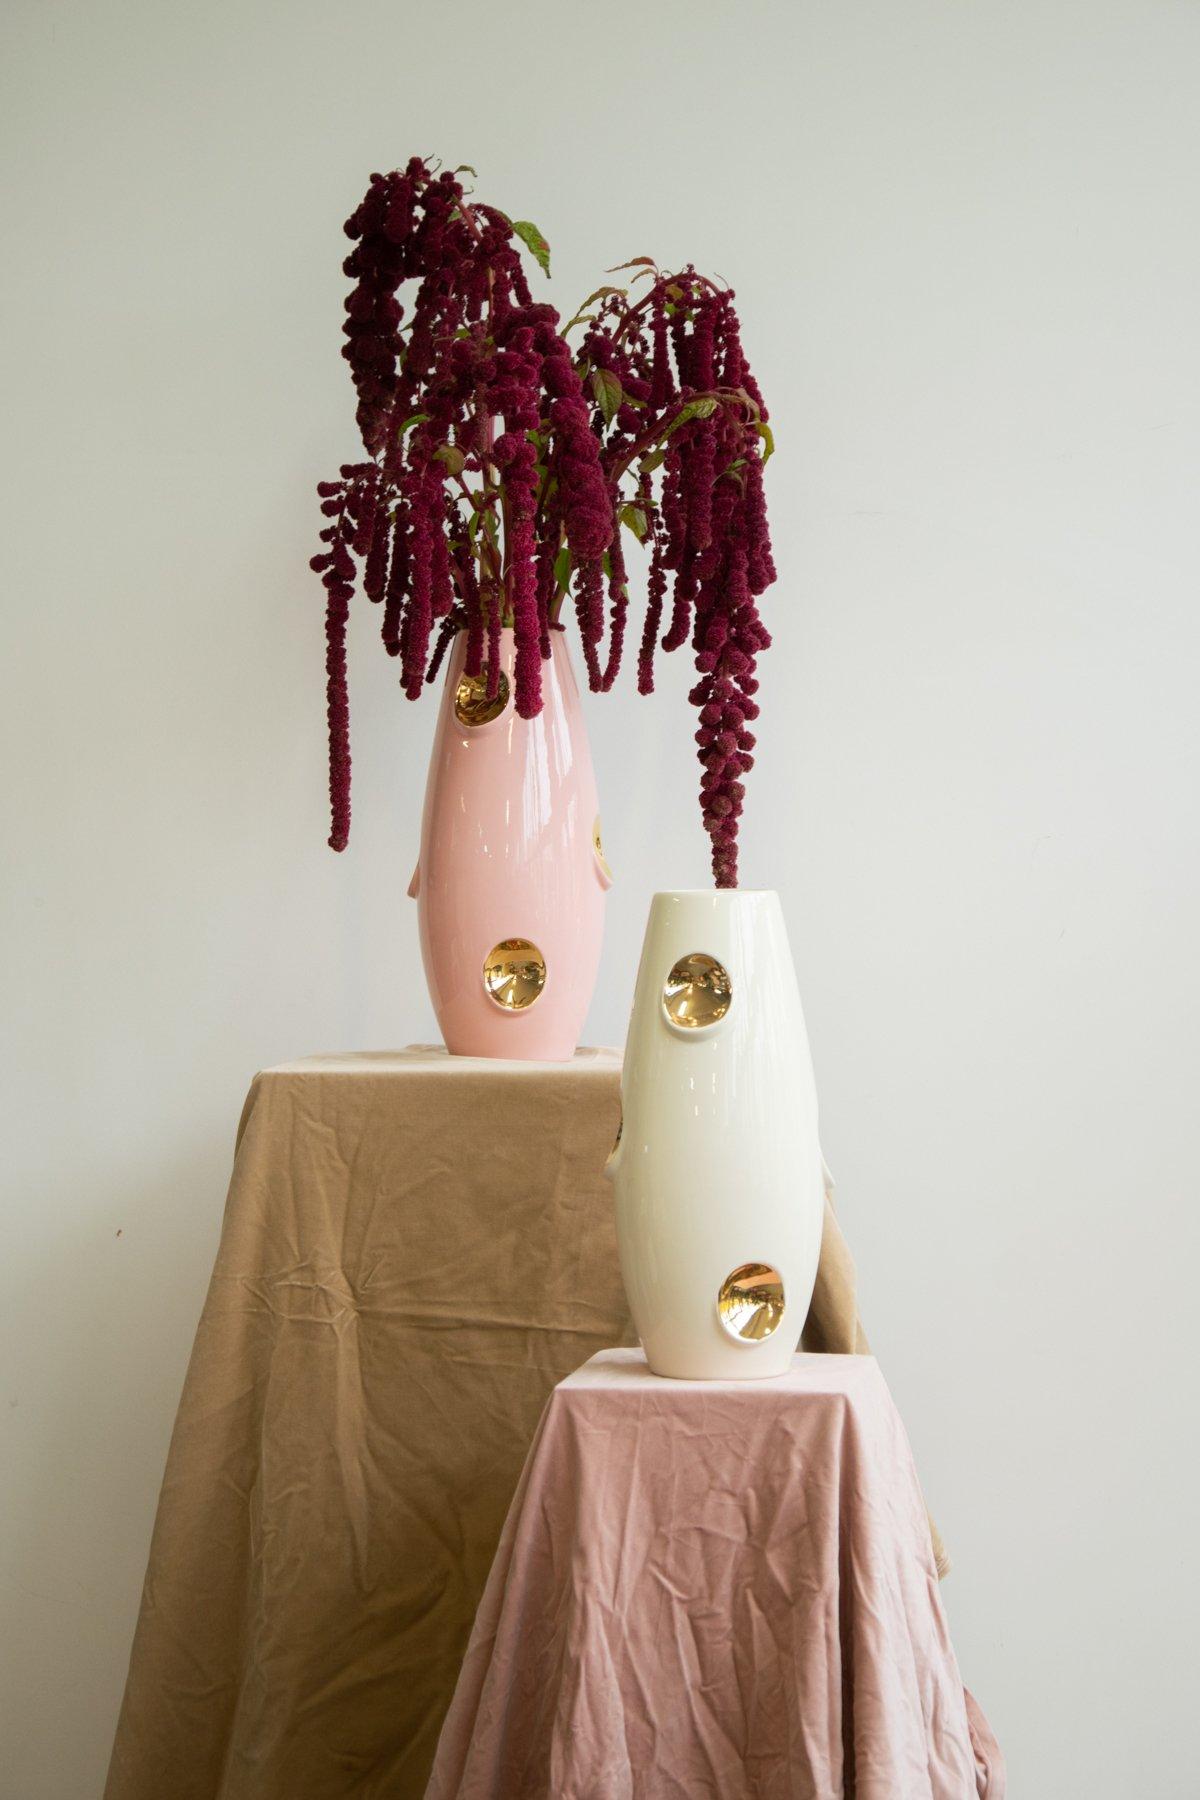 Fired OKO / Gold / Denim Vase by Malwina Konopacka For Sale